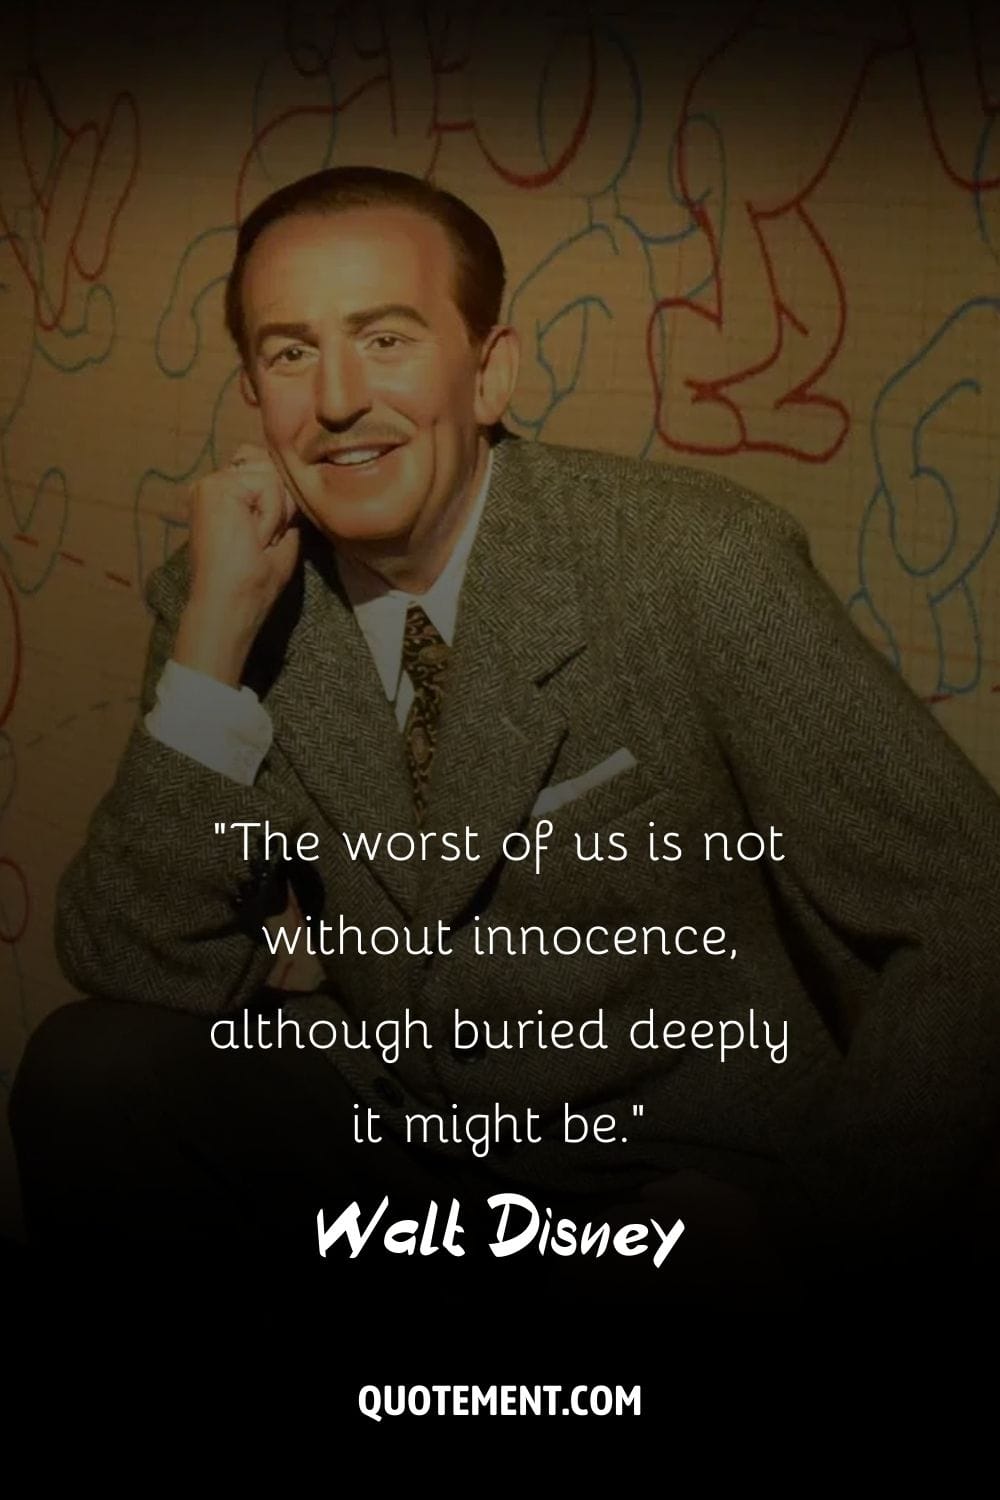 Image of Walt Disney's joyful expression.